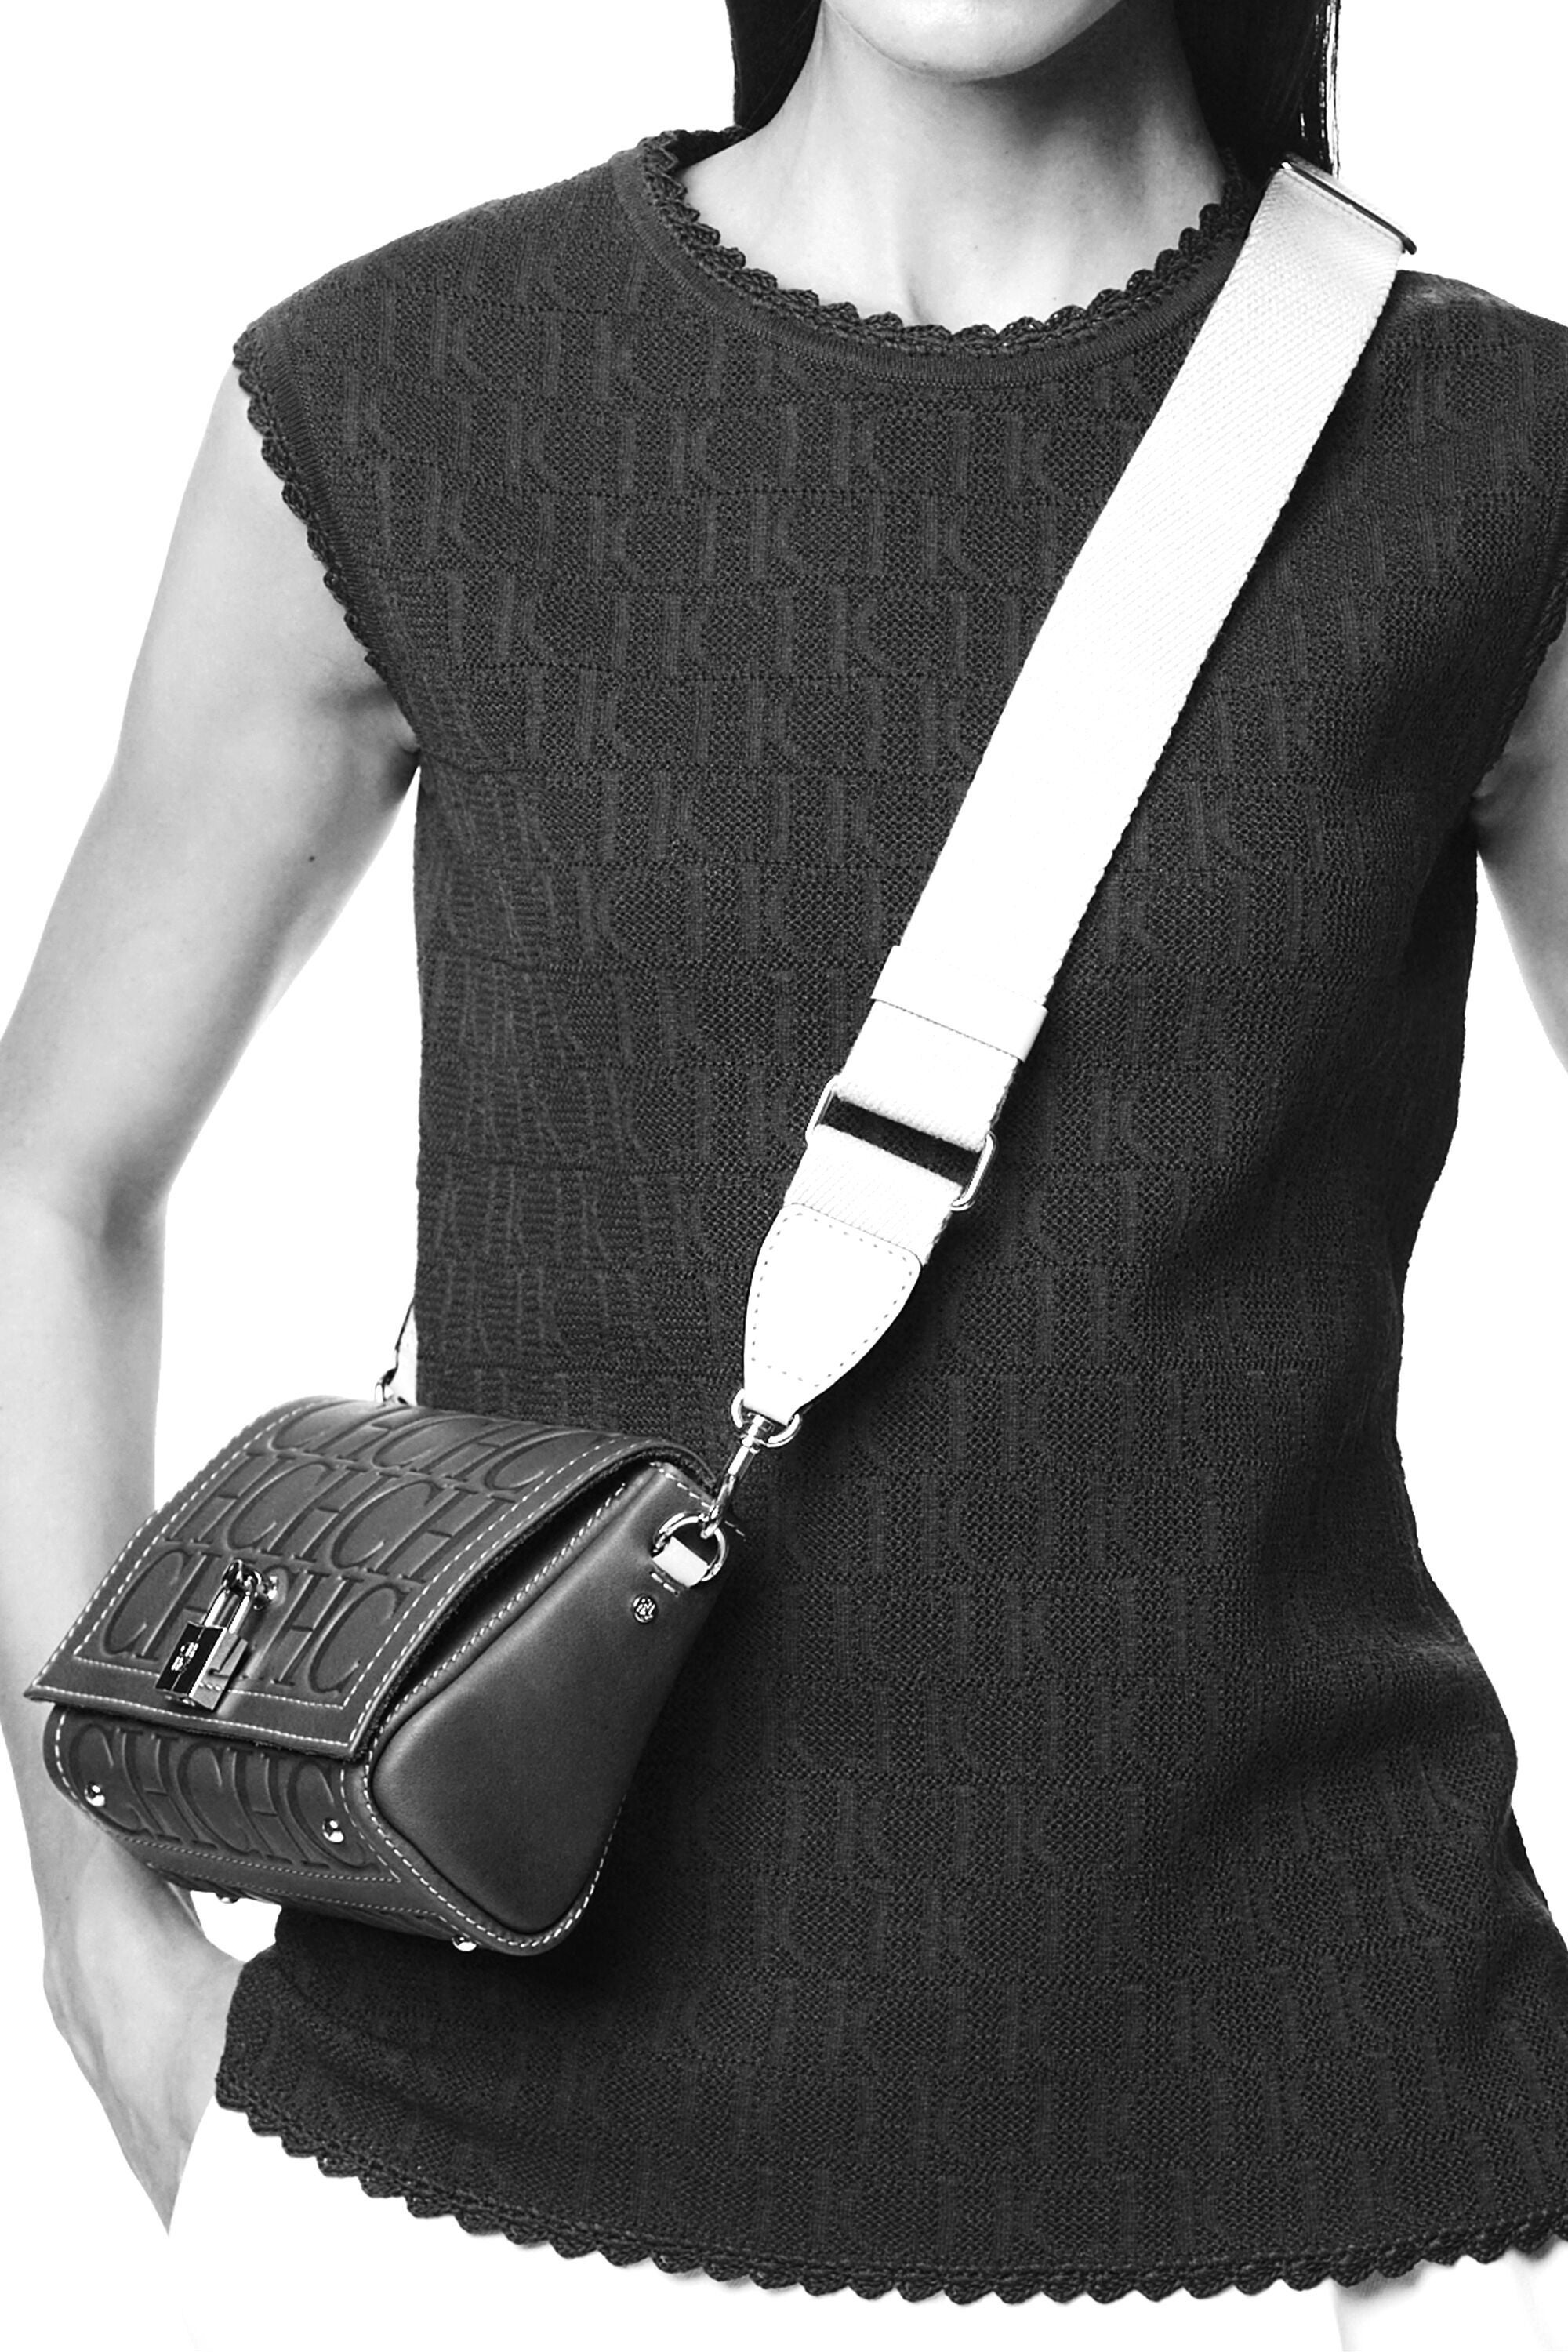 Carolina Herrera Black Crossbody Bag